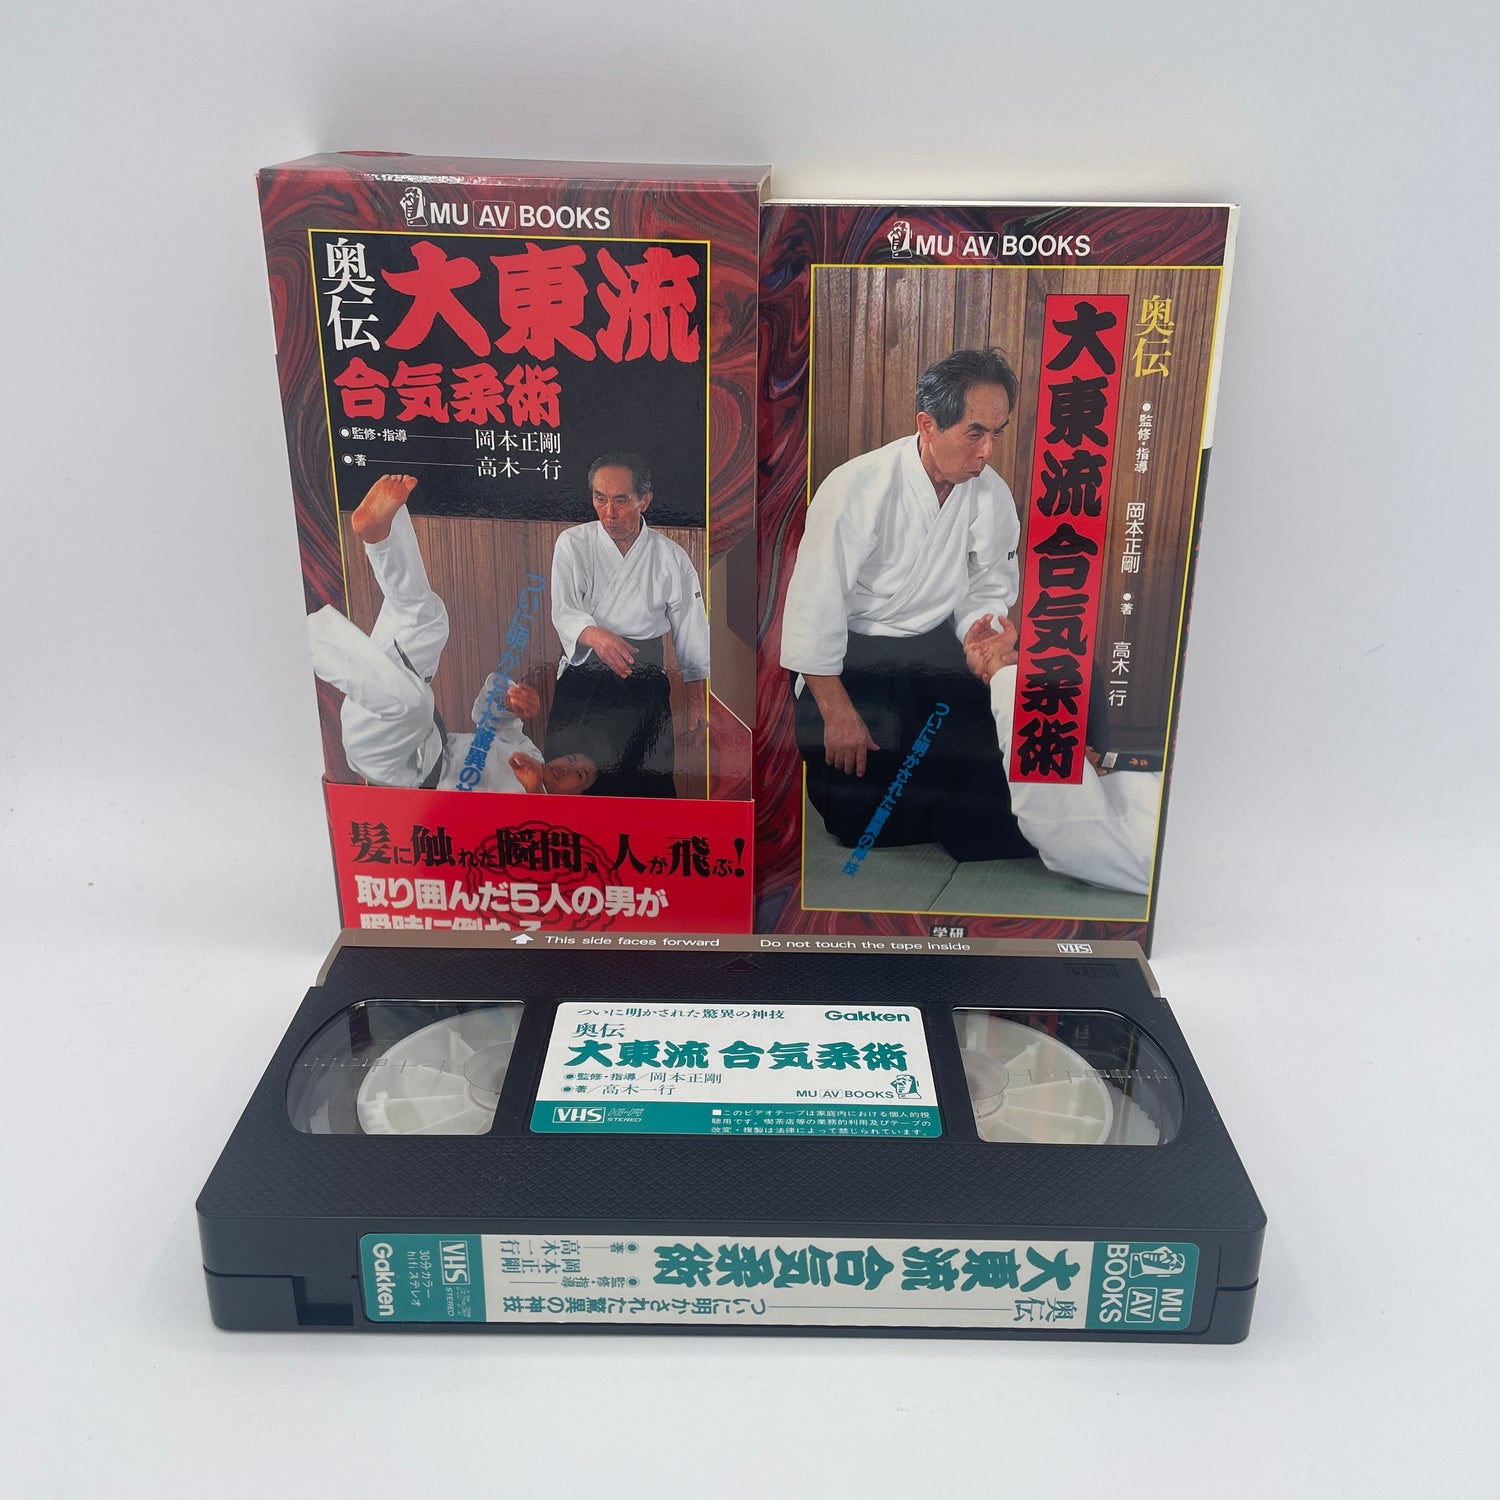 Juego de libro y VHS Daito Ryu Aikijujutsu Kuden de Seigo Okamoto (usado)